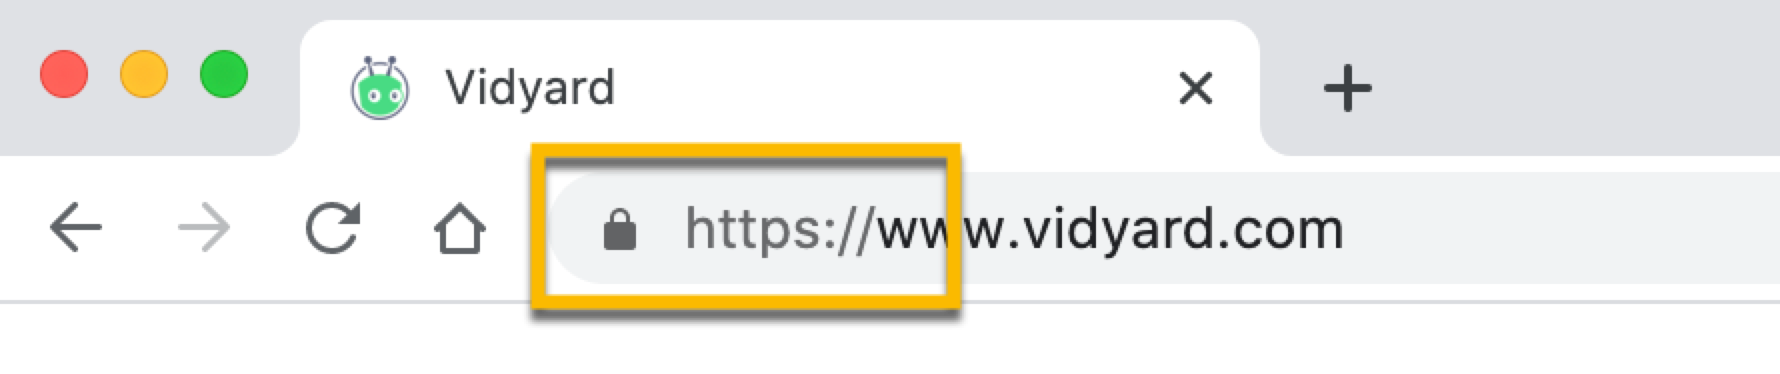 URL bar in Google Chrome showing Vidyard website secured with HTTPS